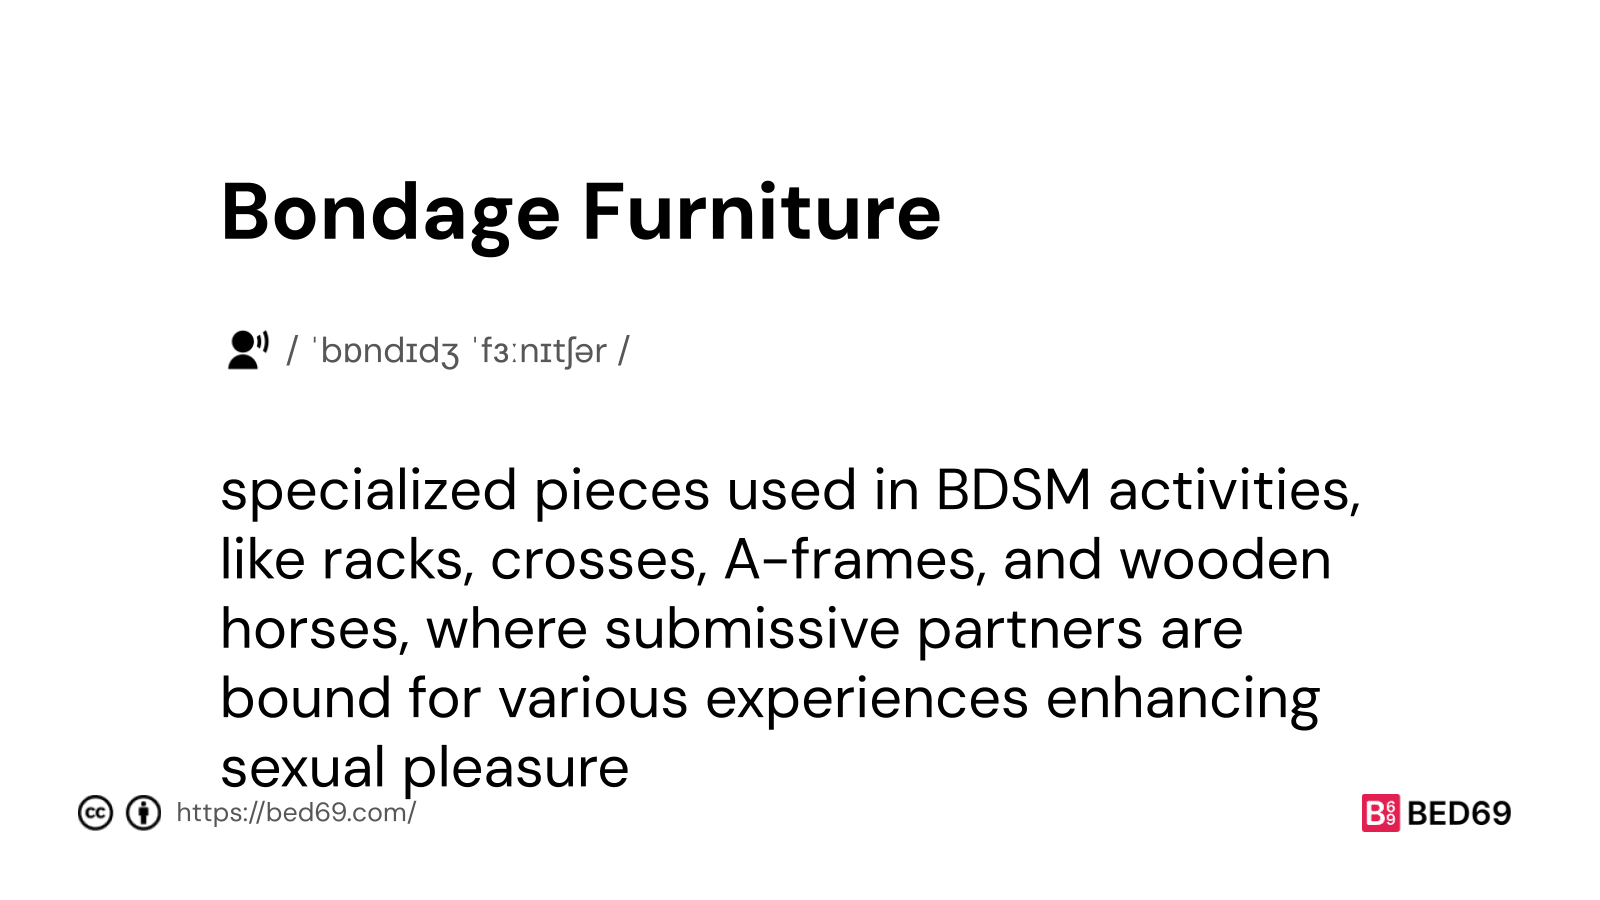 Bondage Furniture - Word Definition